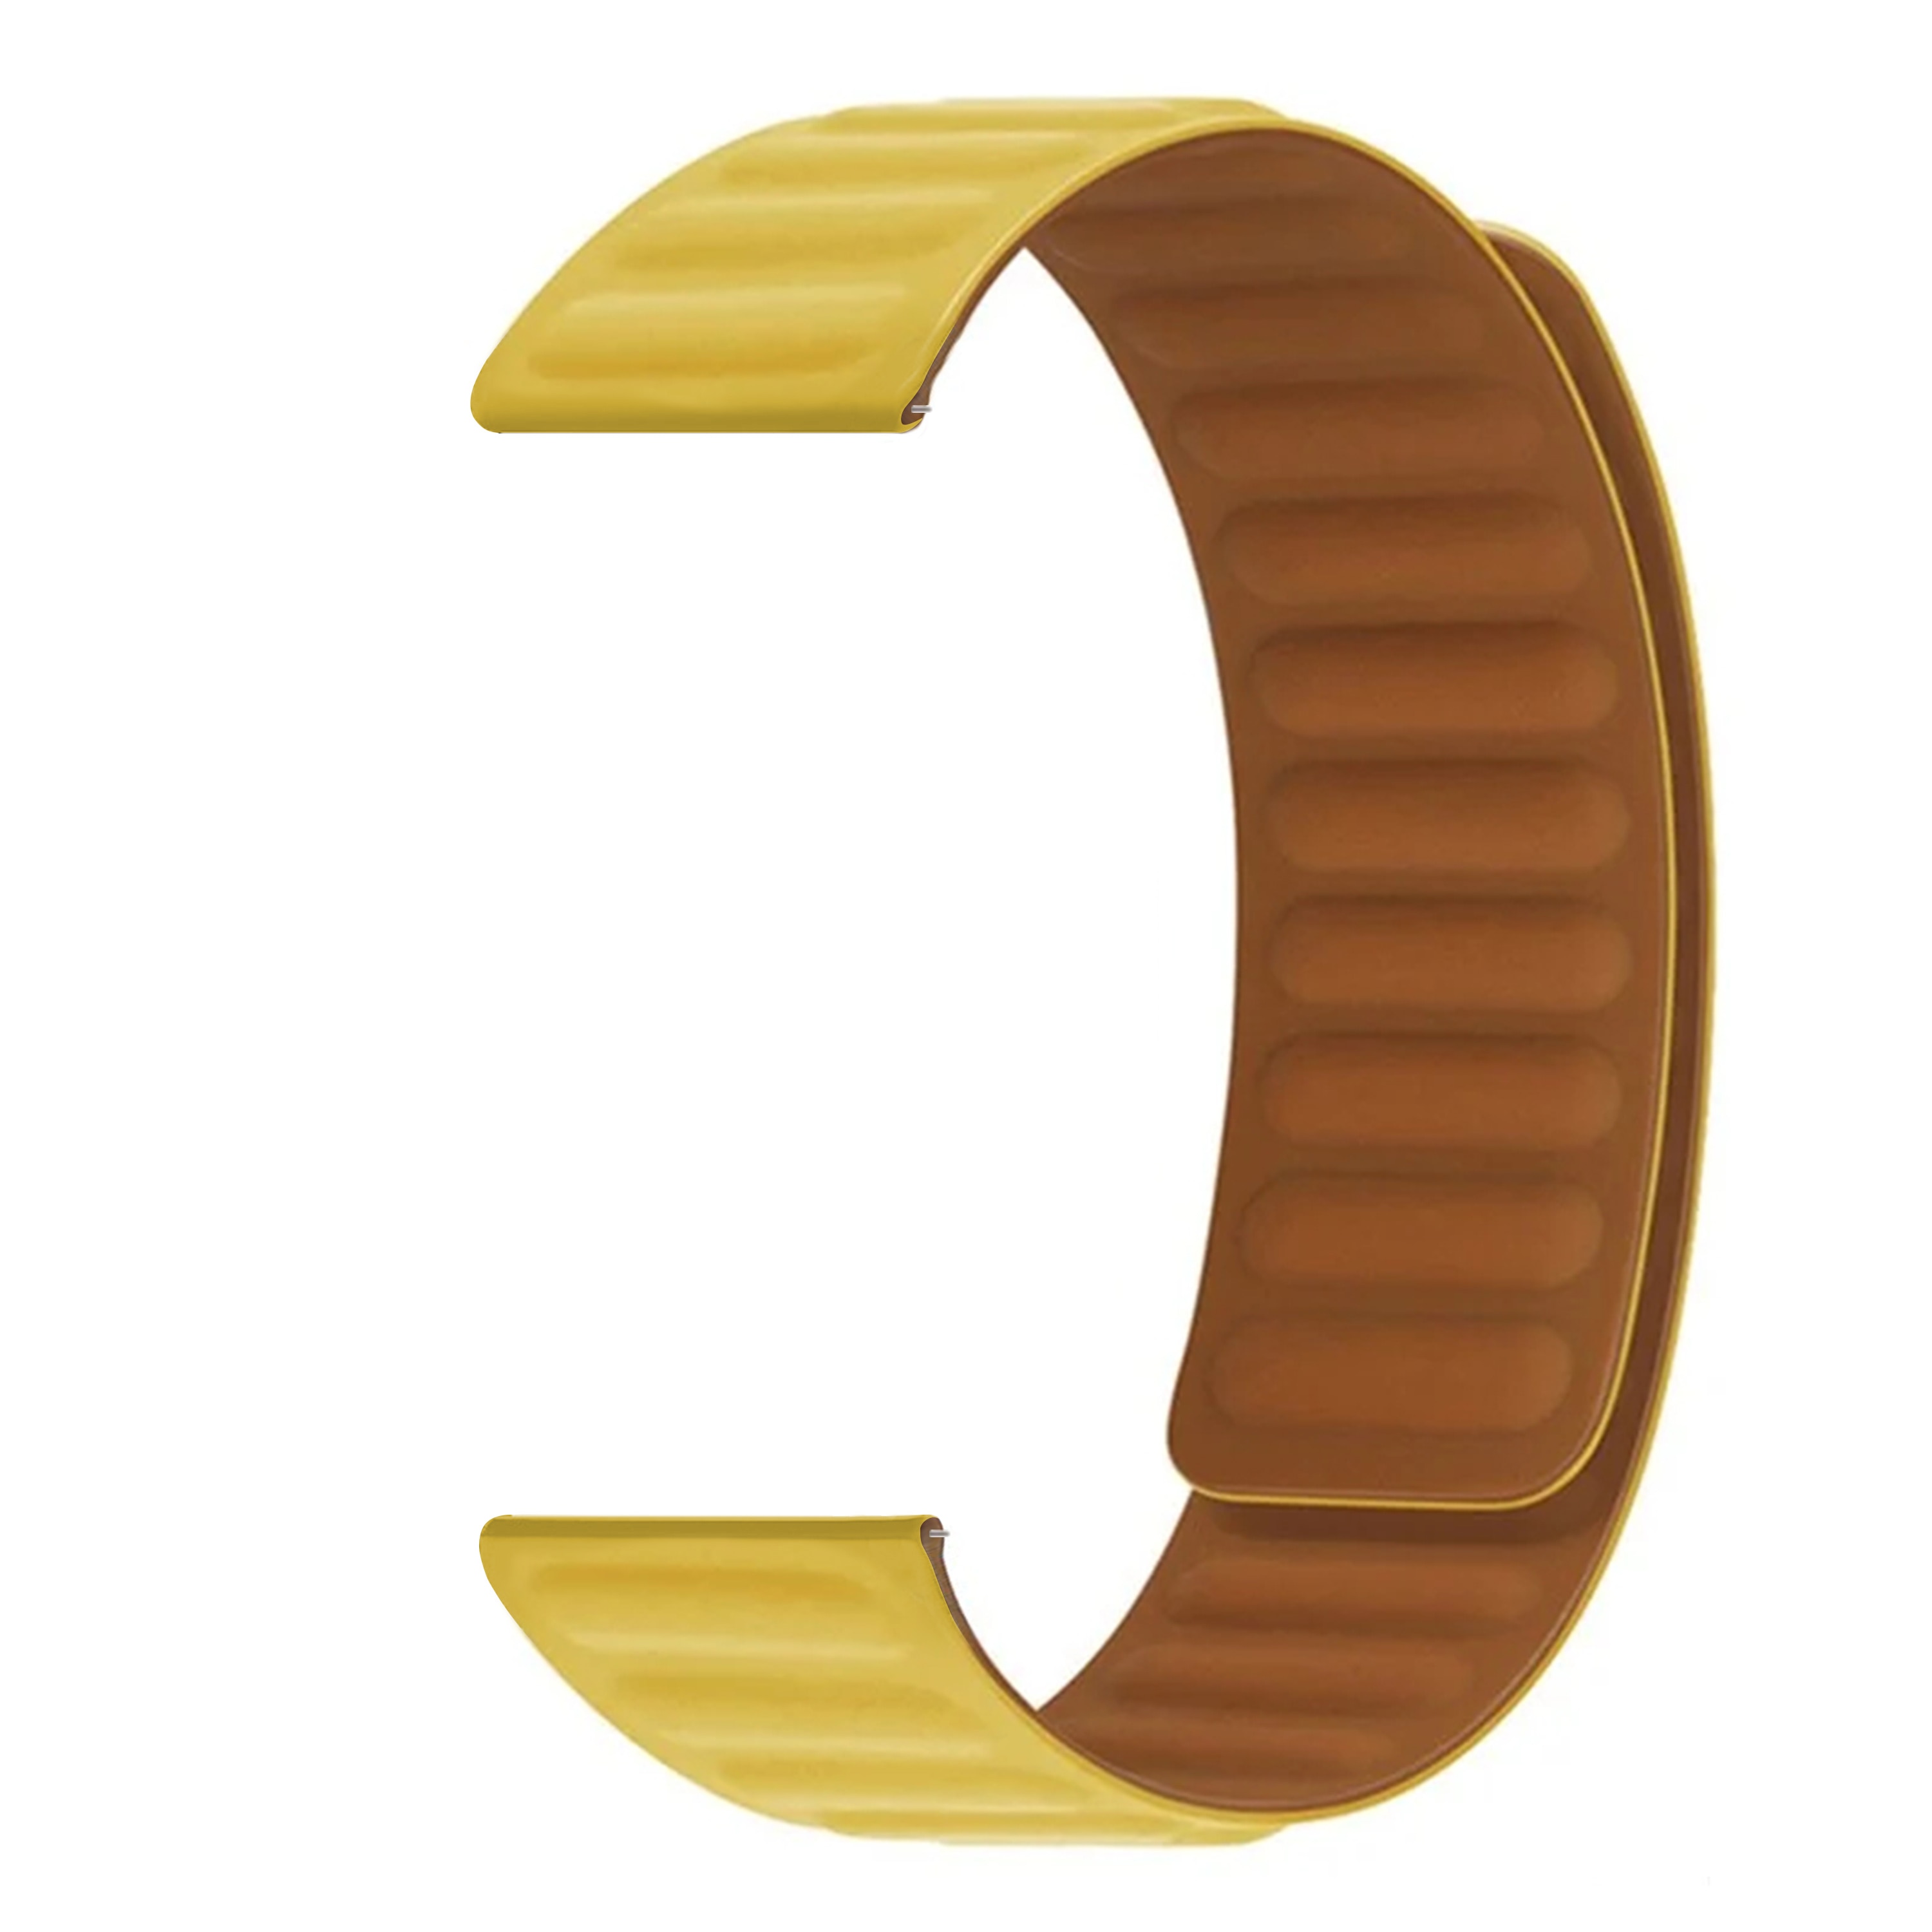 Bracelet magnétique en silicone Polar Ignite 2, jaune